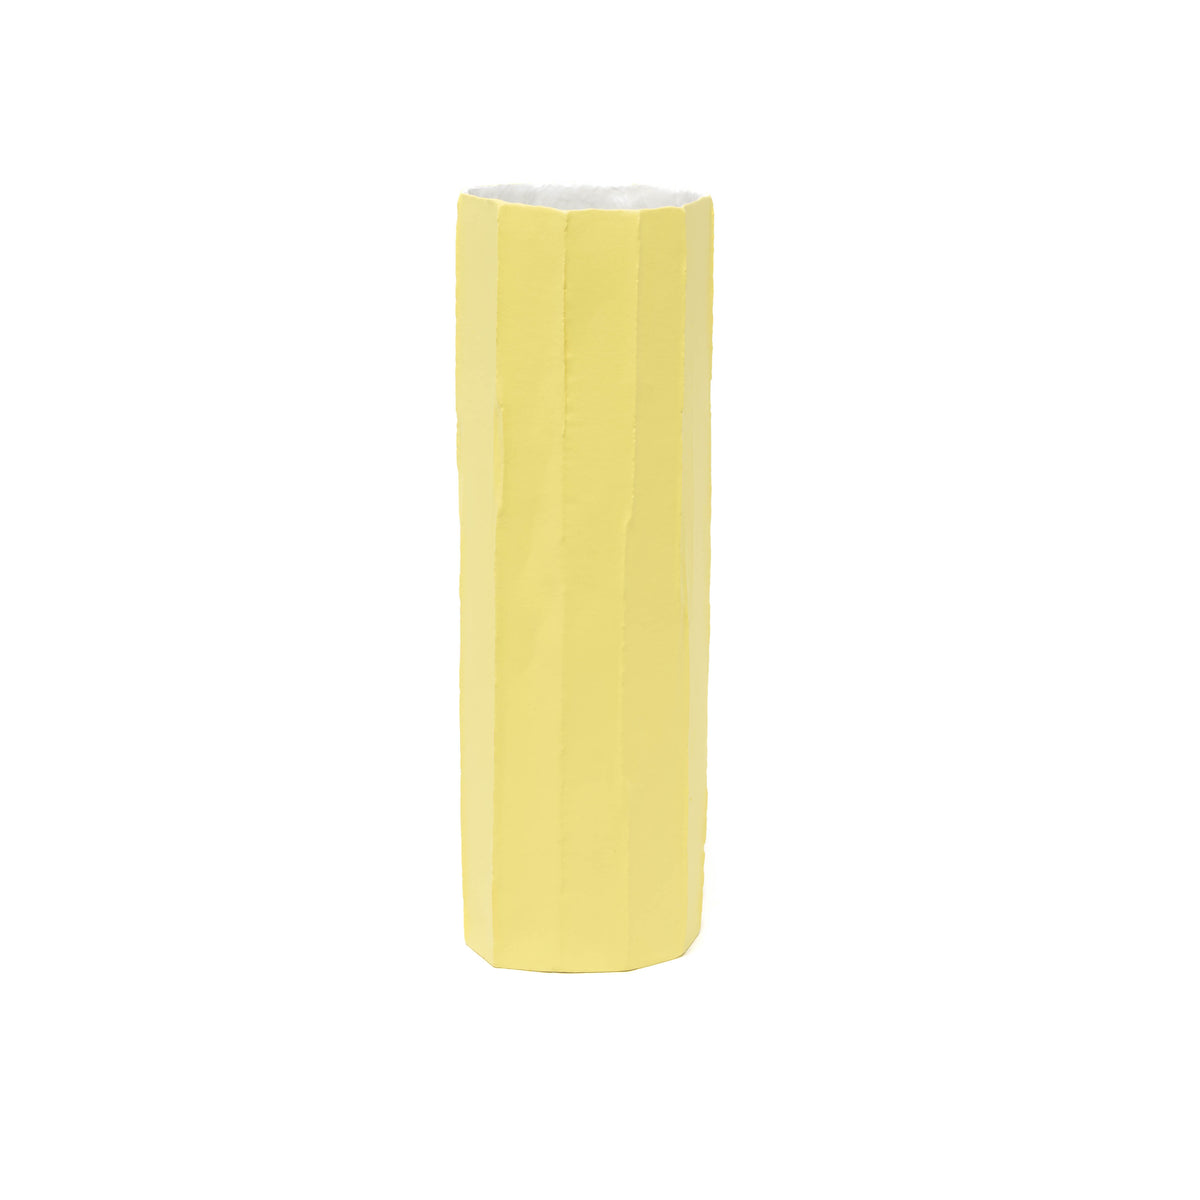 Mono Vase paperclay H28, B11